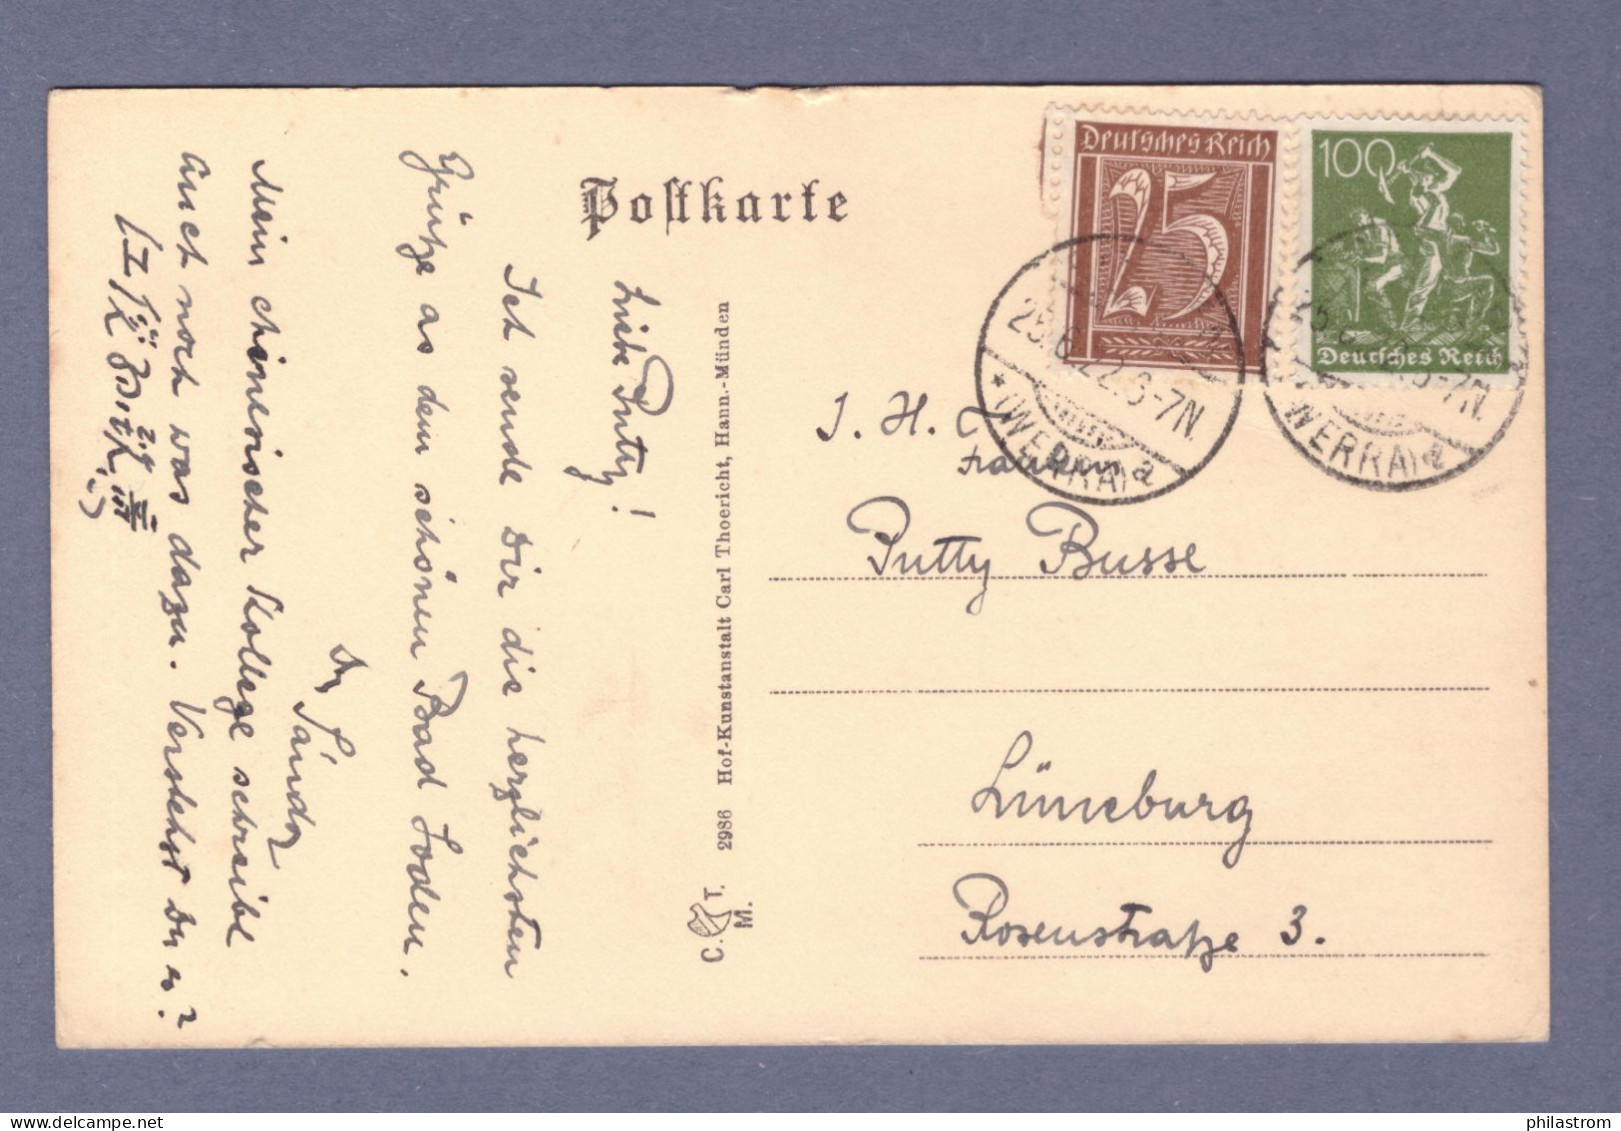 Weimar INFLA Postkarte AK (Bad Sooden A. Werra) 25.6.22 (CG13110-260) - Covers & Documents